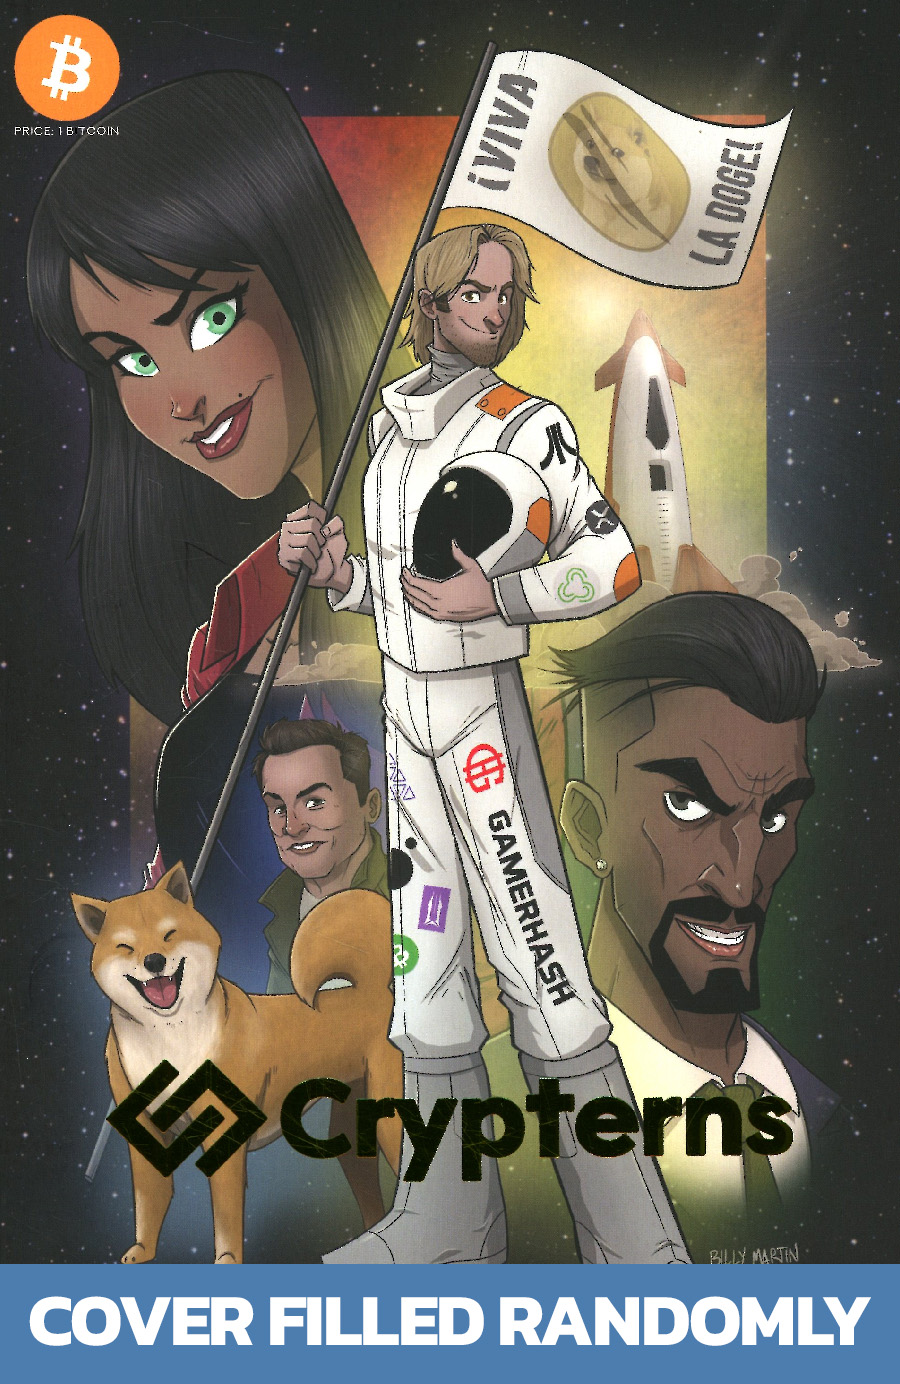 Crypterns #1 Viva La Doge (Filled Randomly)